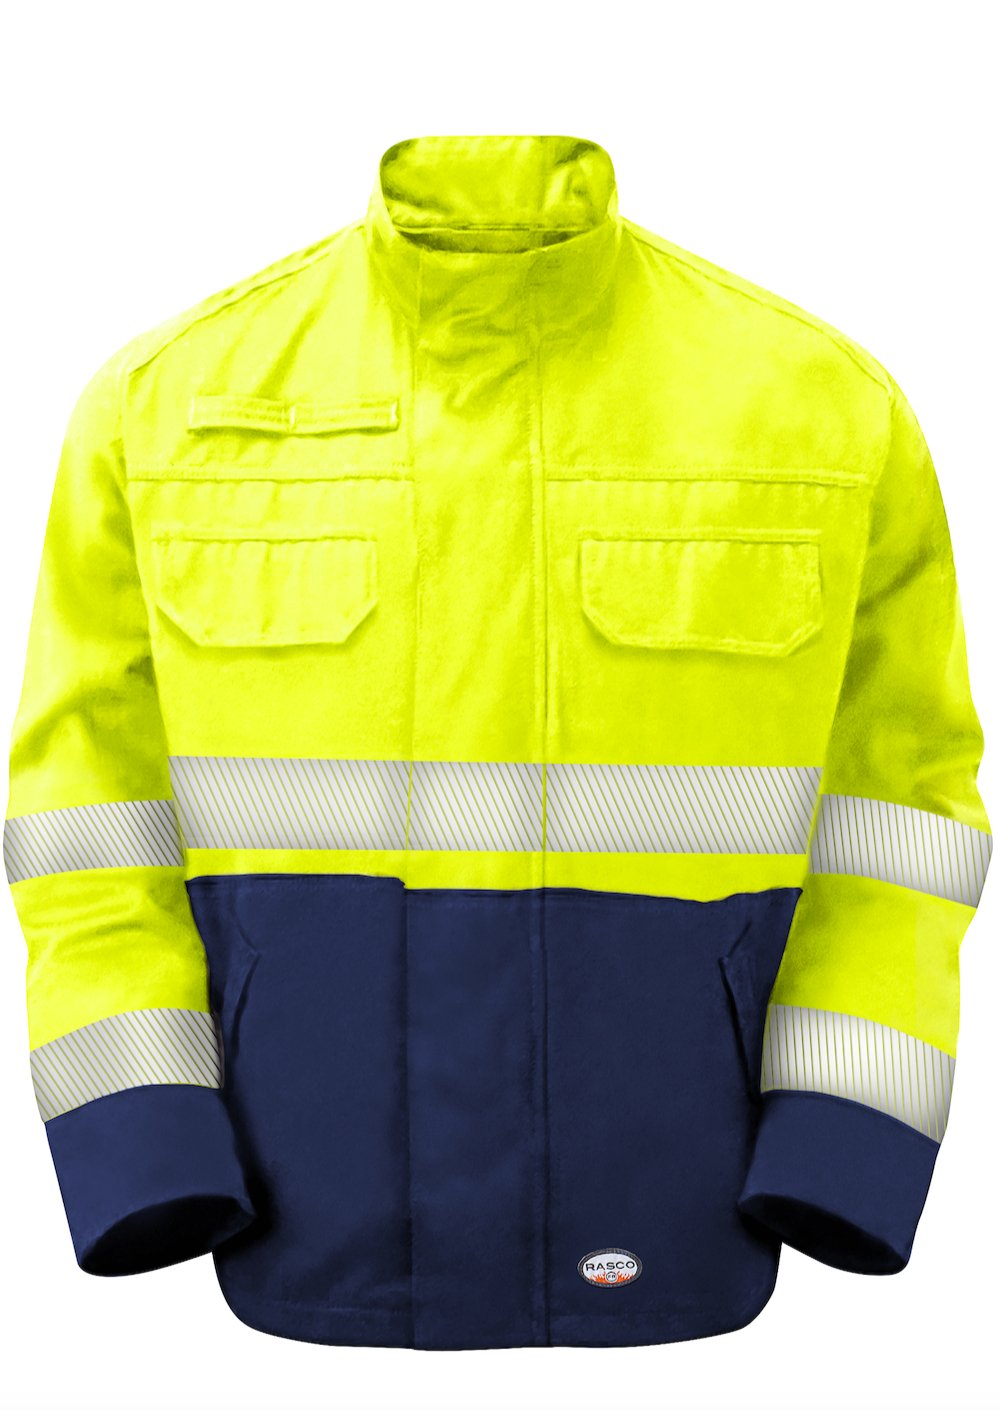 FR GlenGuard Color Block Field Jacket w/ Reflective Trim- Navy/Yellow - Rasco FR